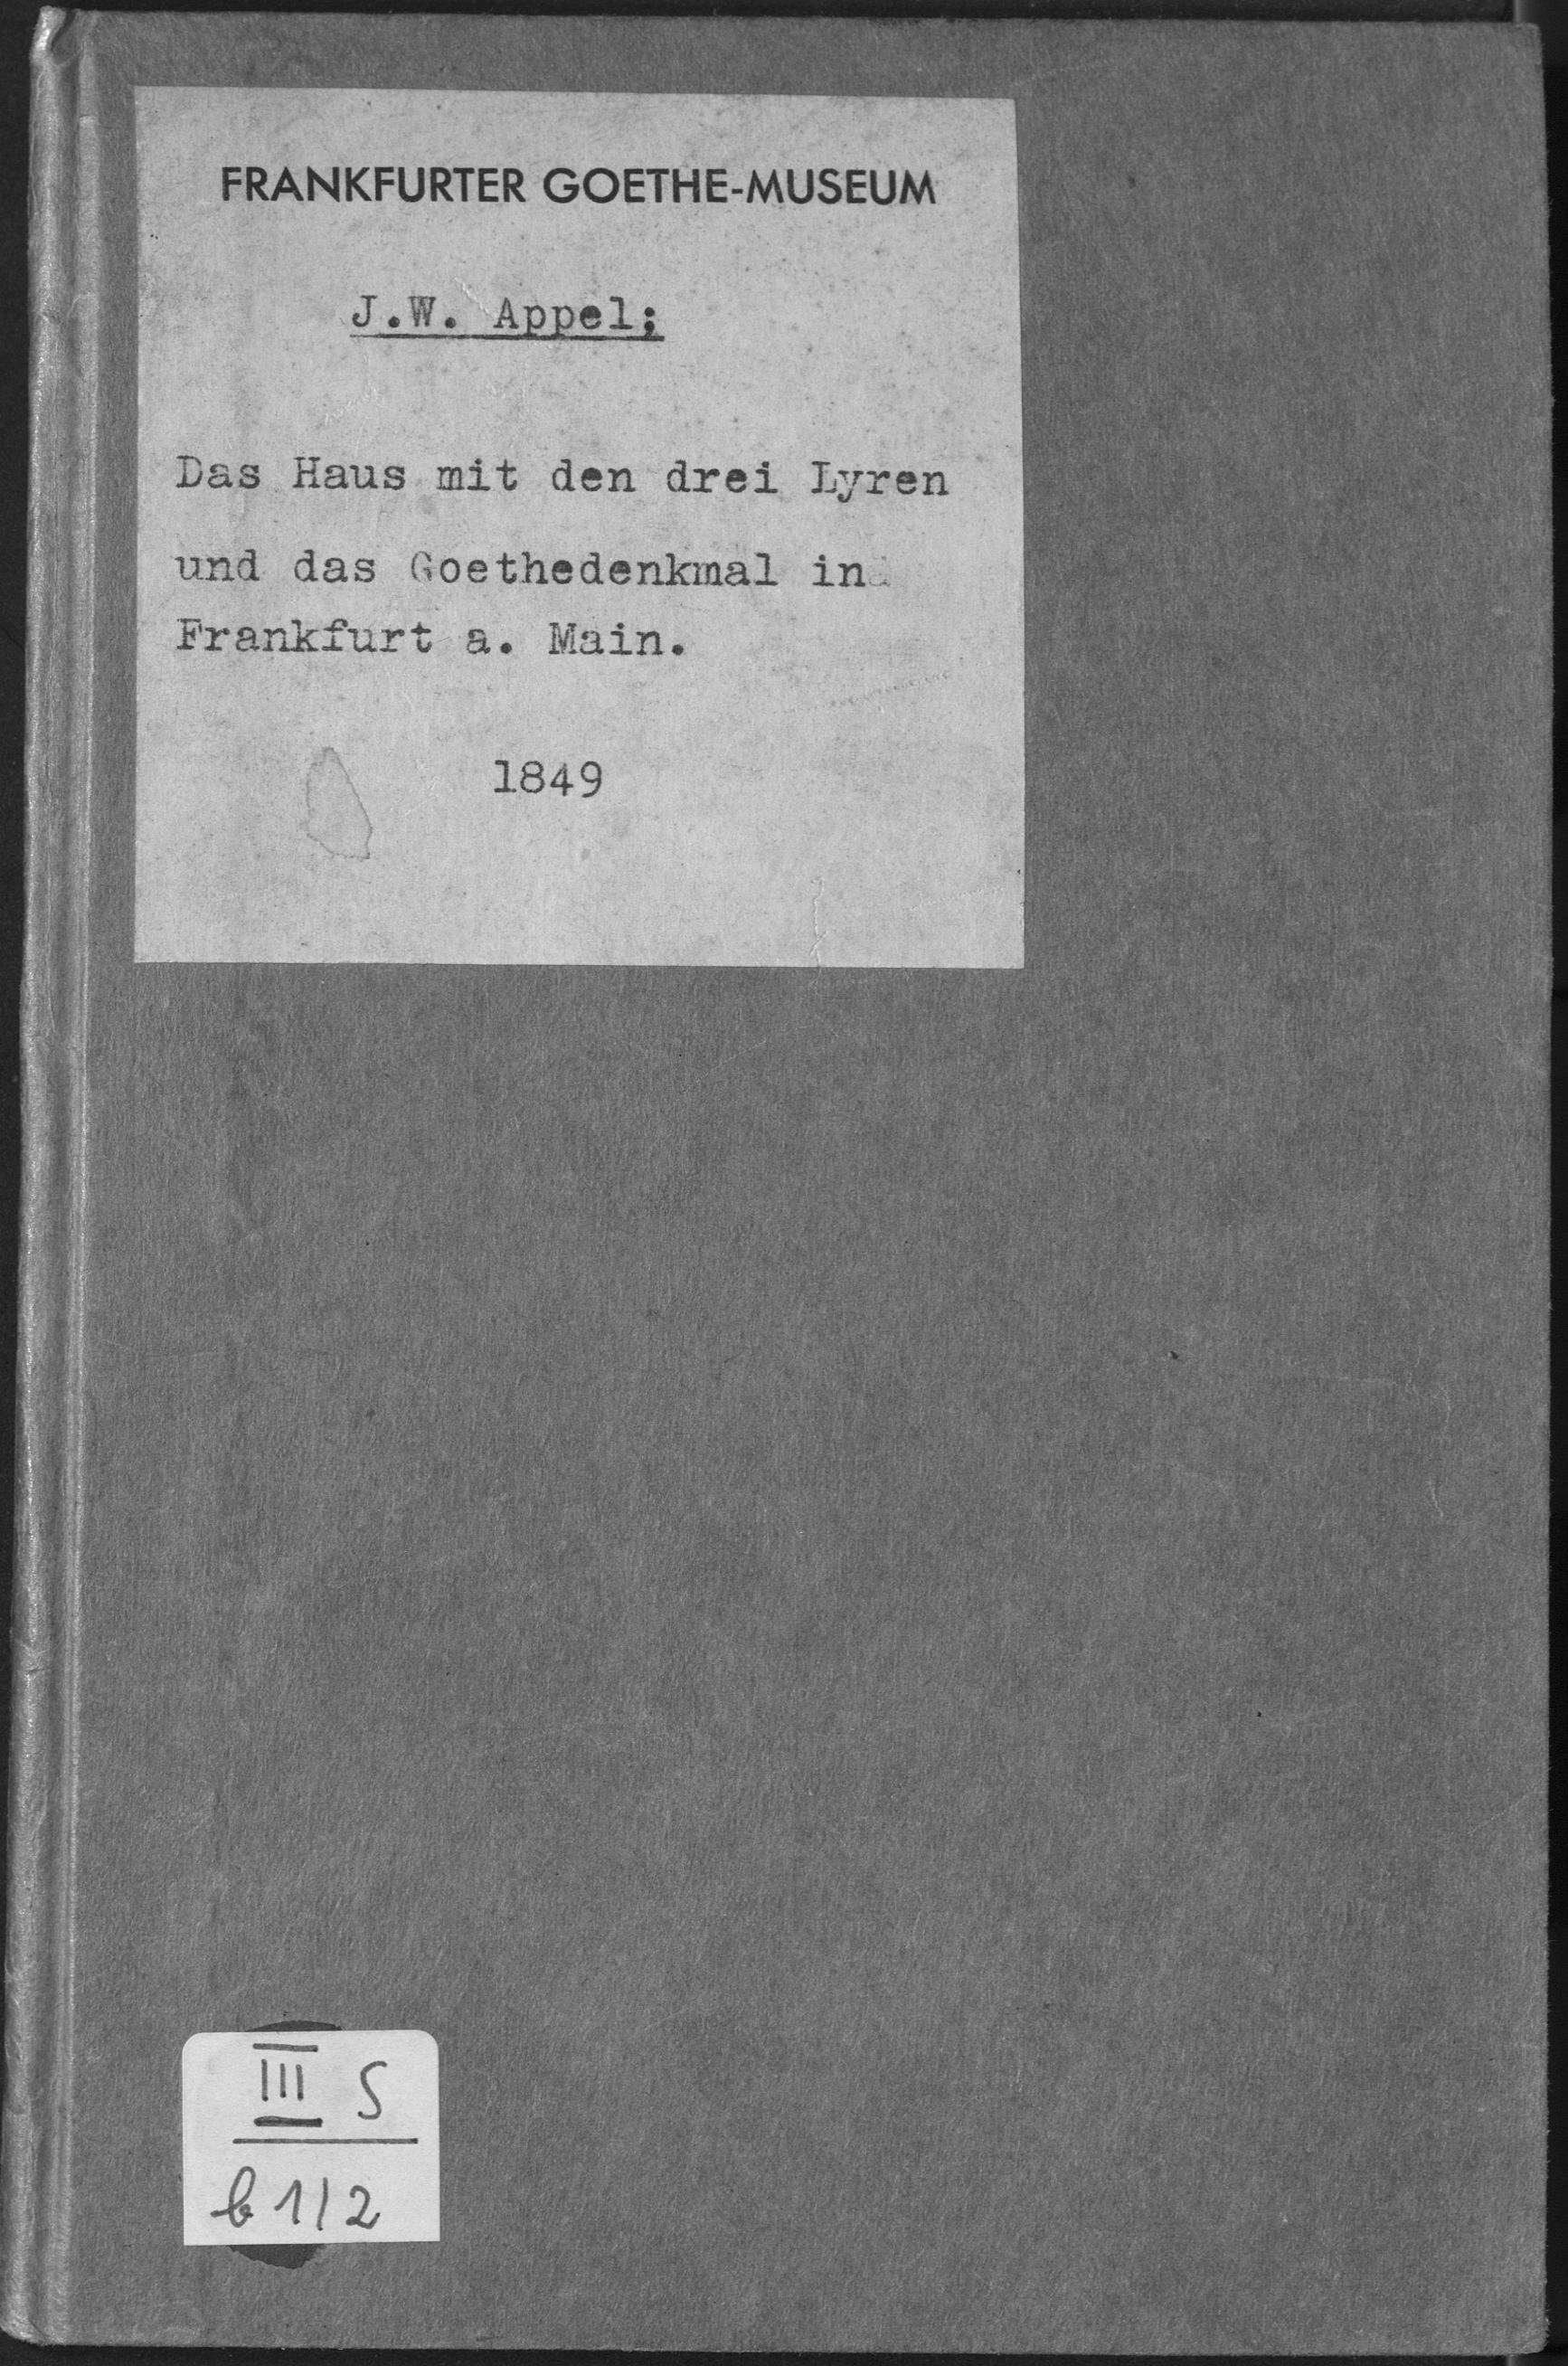 IIIS-b1-2 (Freies Deutsches Hochstift / Frankfurter Goethe-Museum Public Domain Mark)